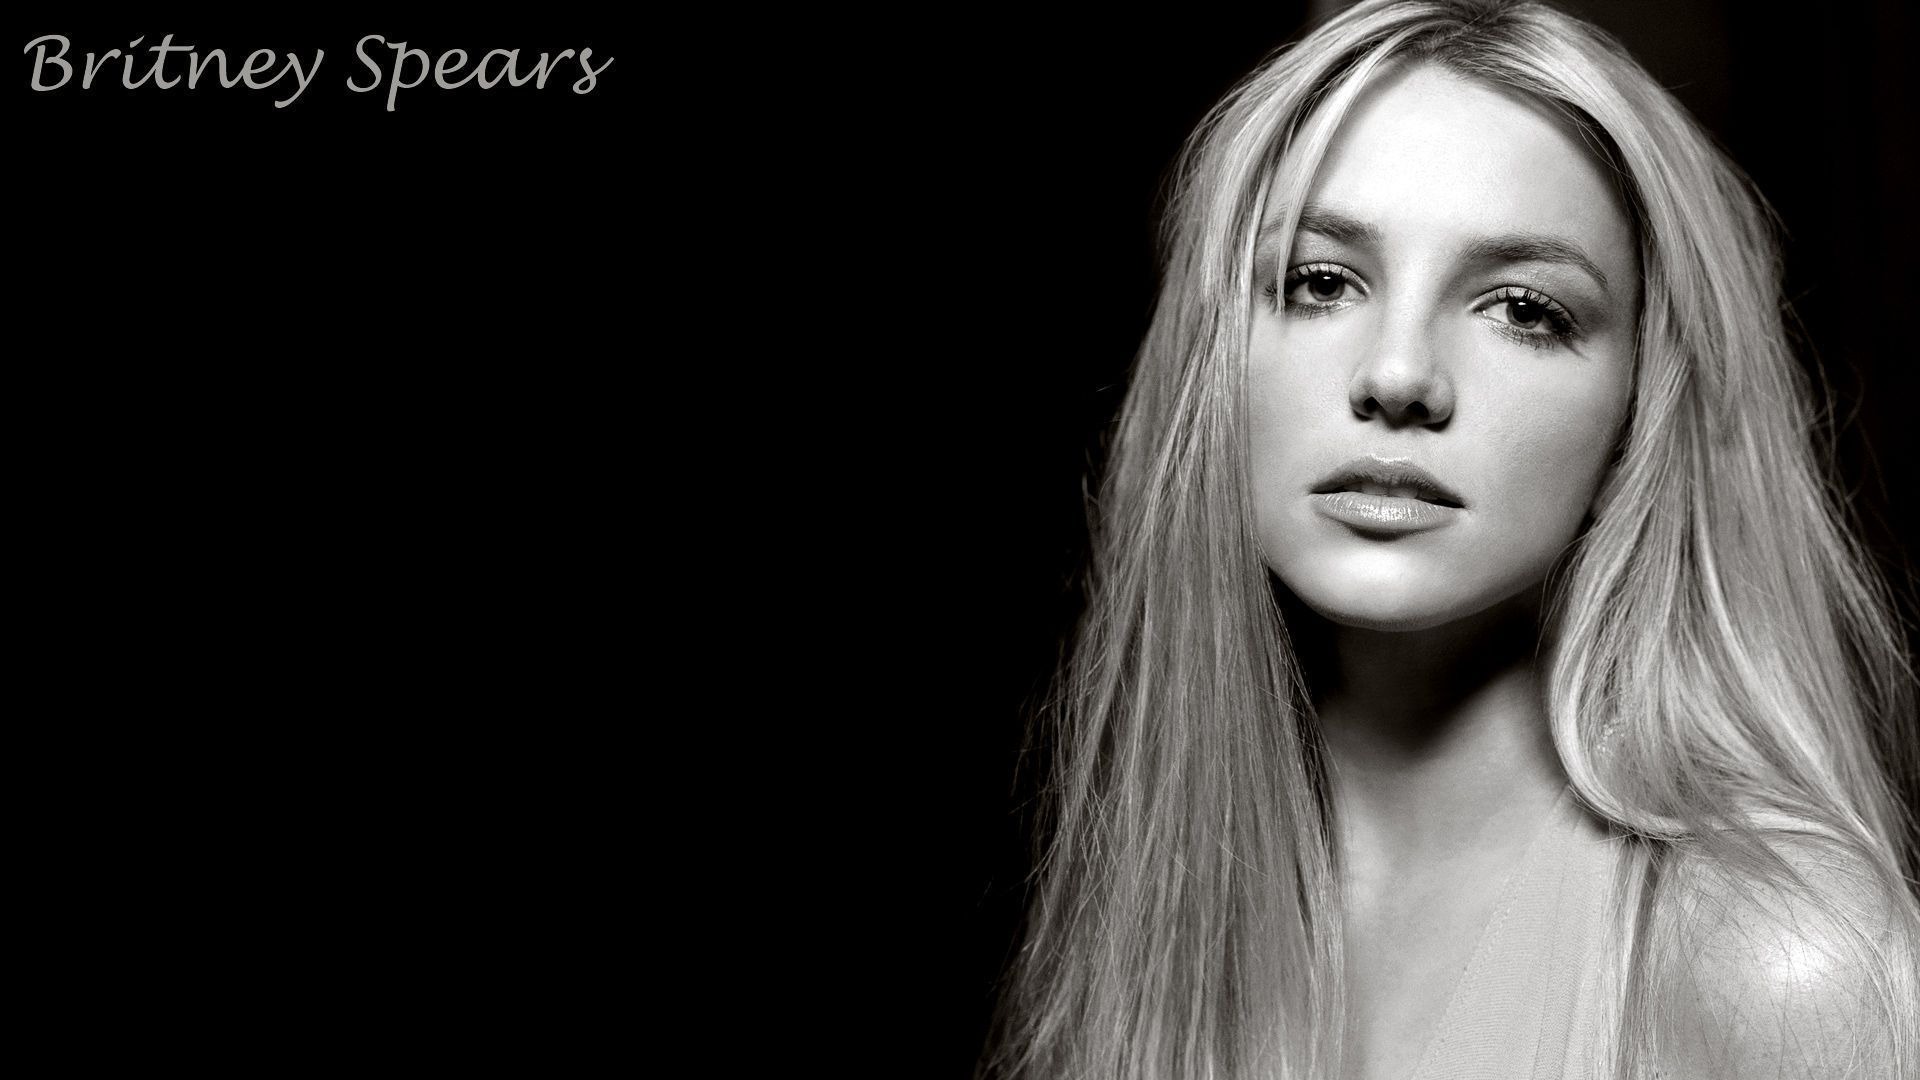 Fond d'écran Britney Spears belle #5 - 1920x1080